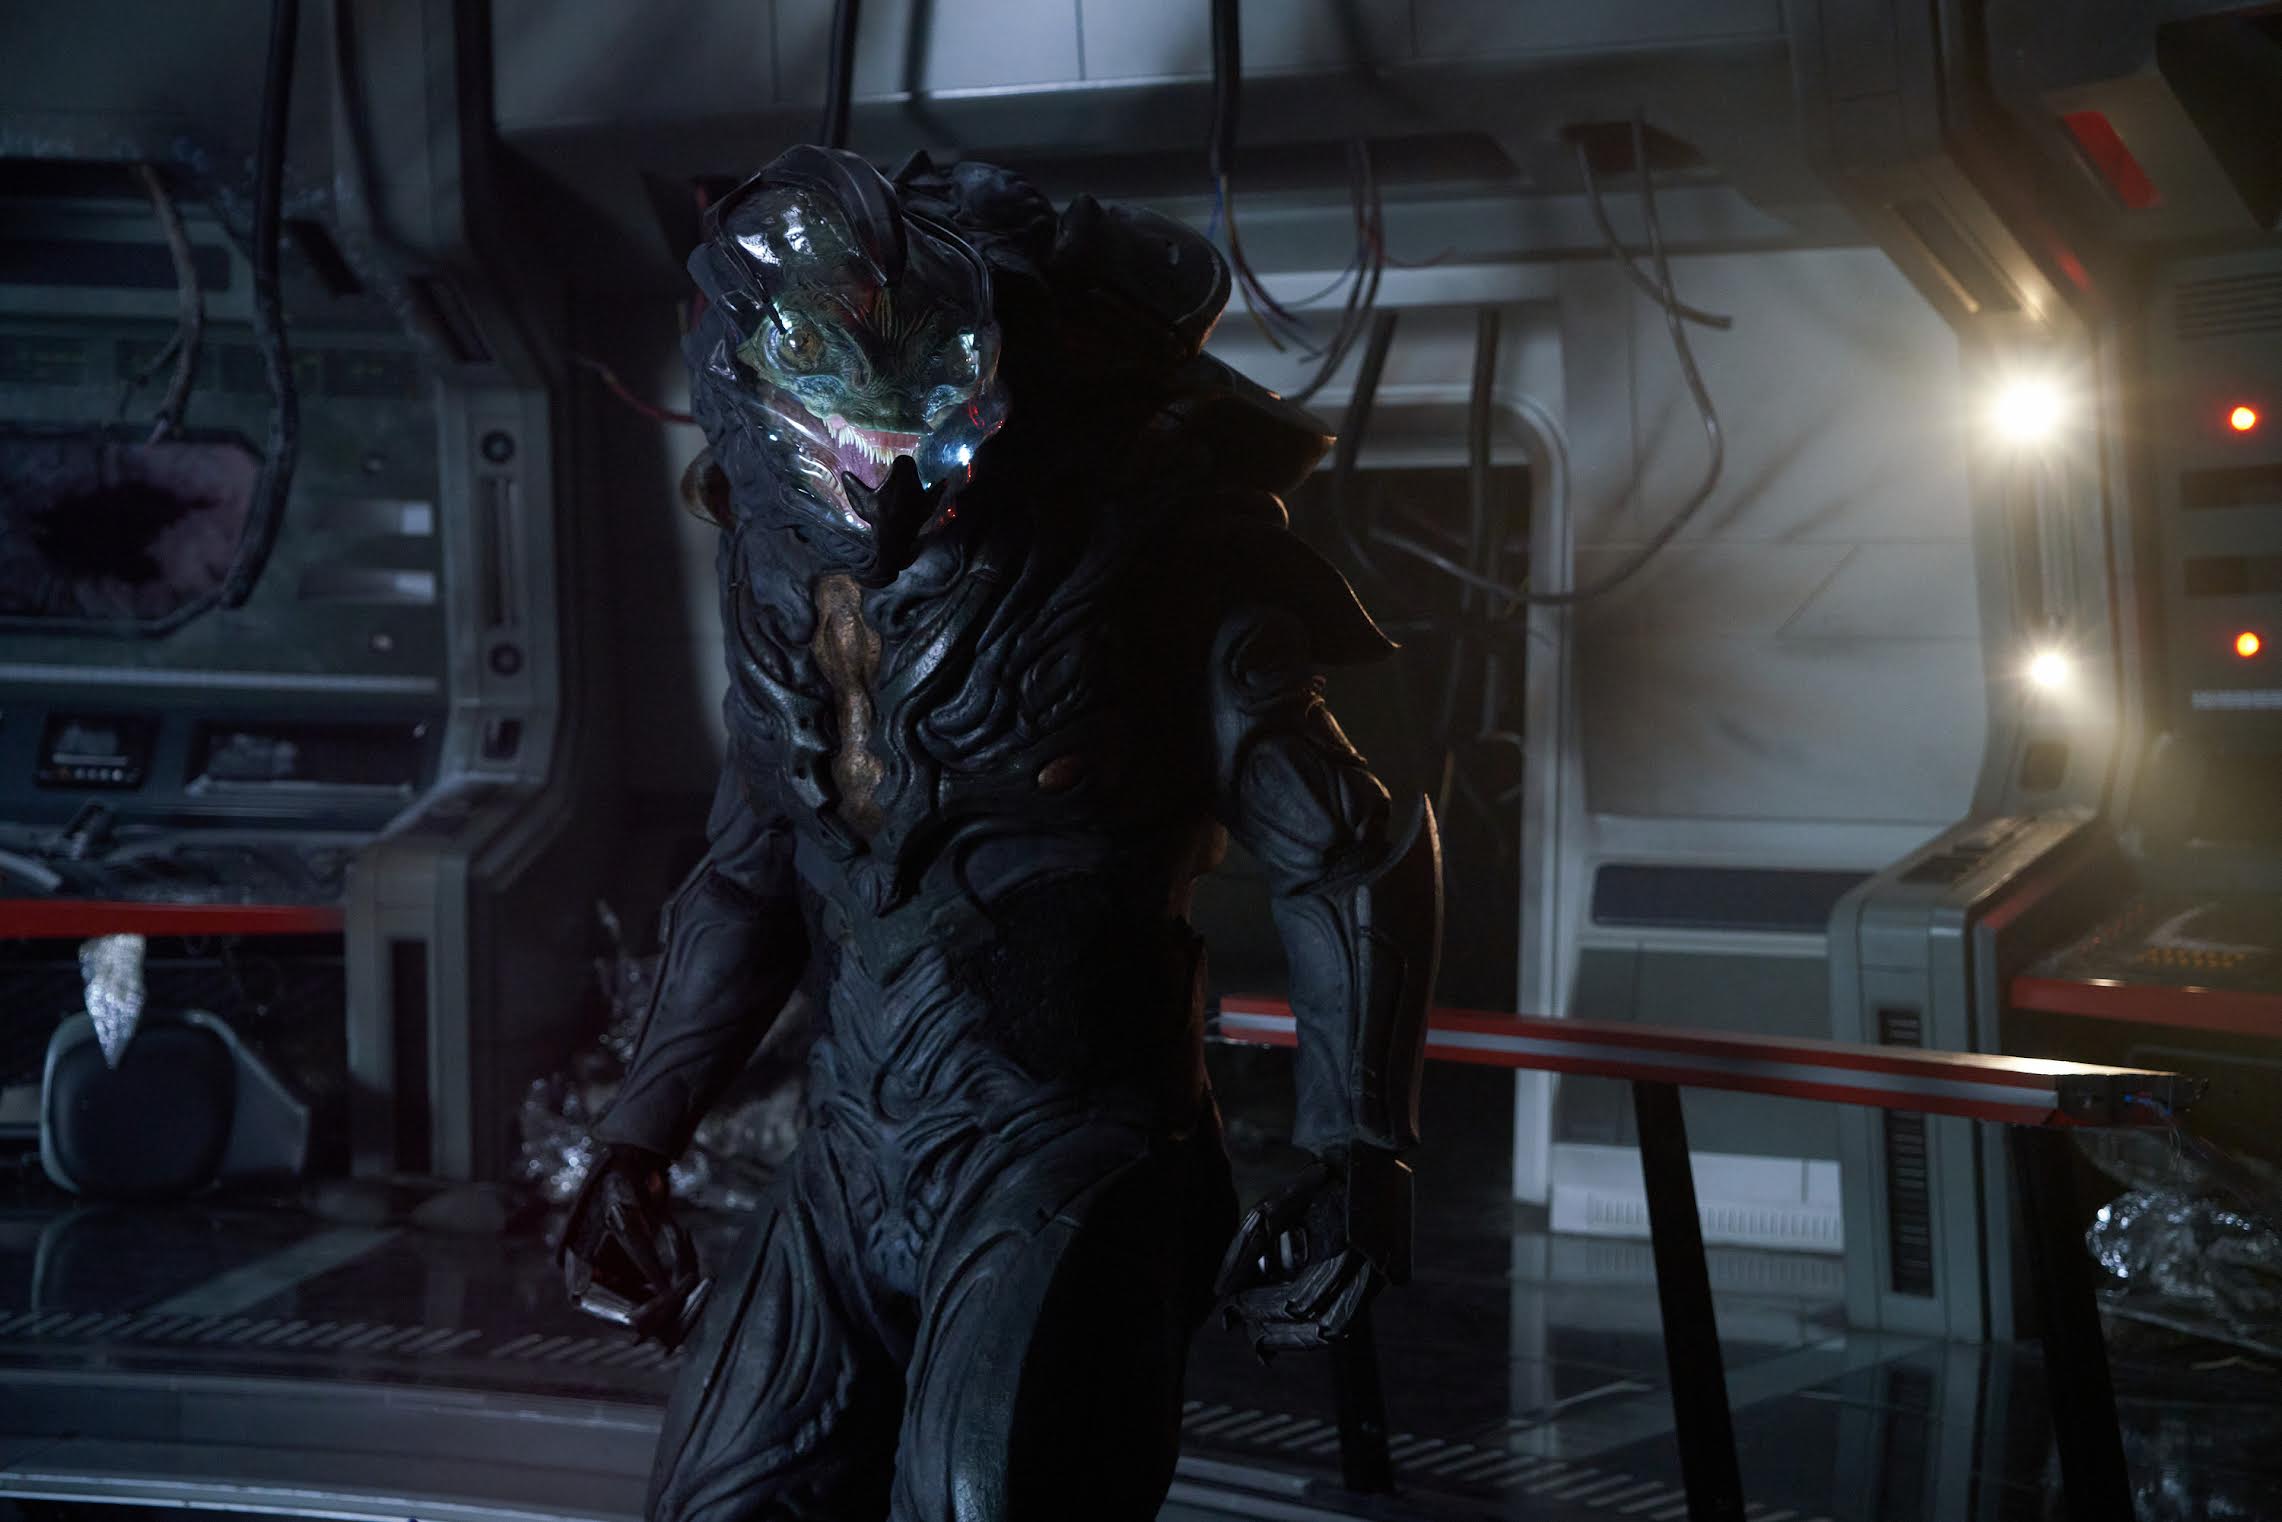 a reptilian alien in a sleek dark spacesuit stands inside a spaceship.